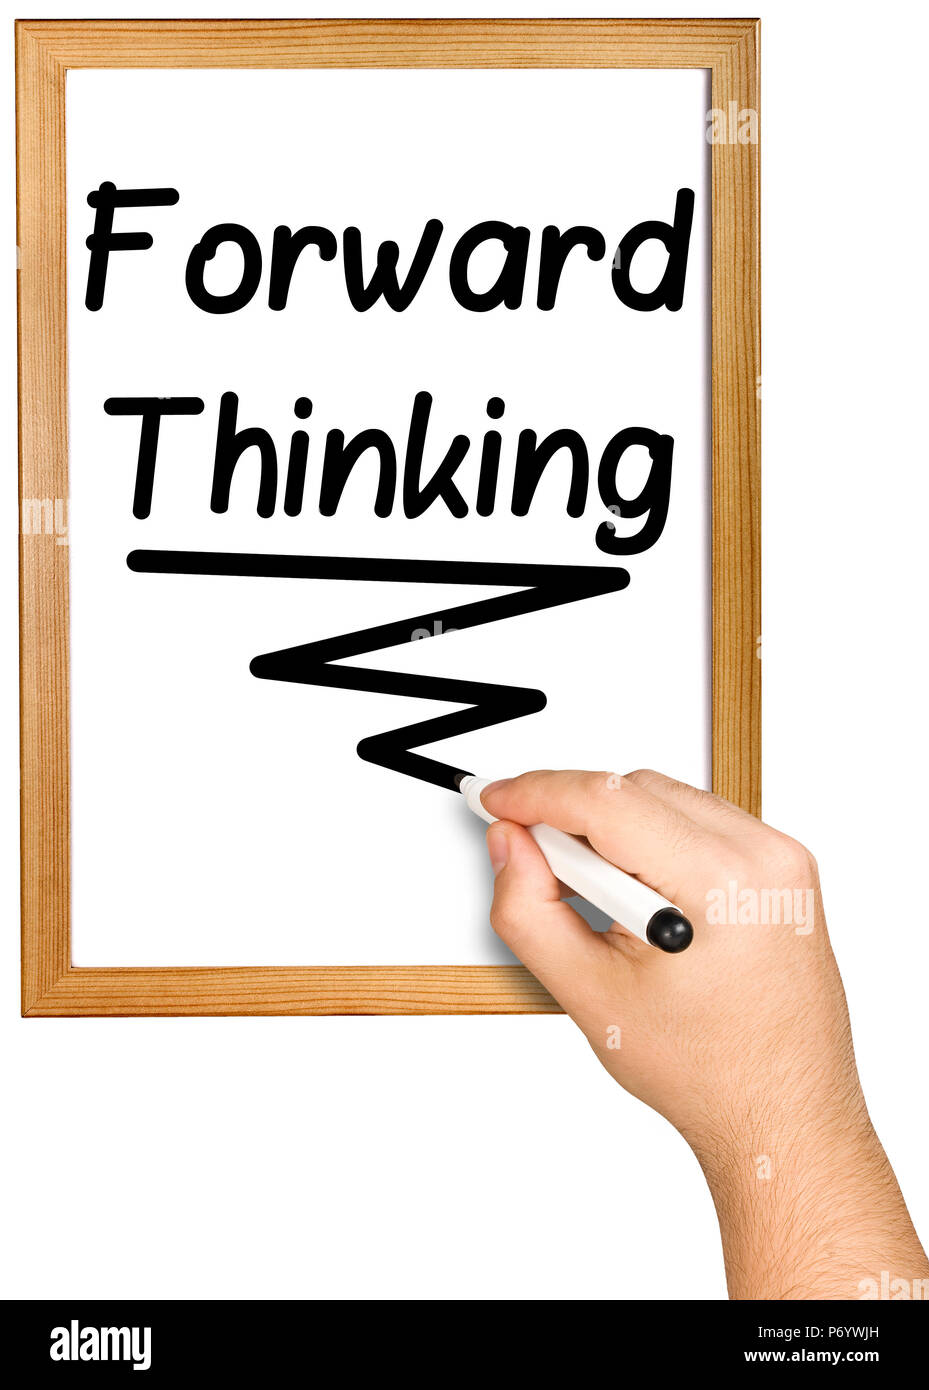 forward thinking compact